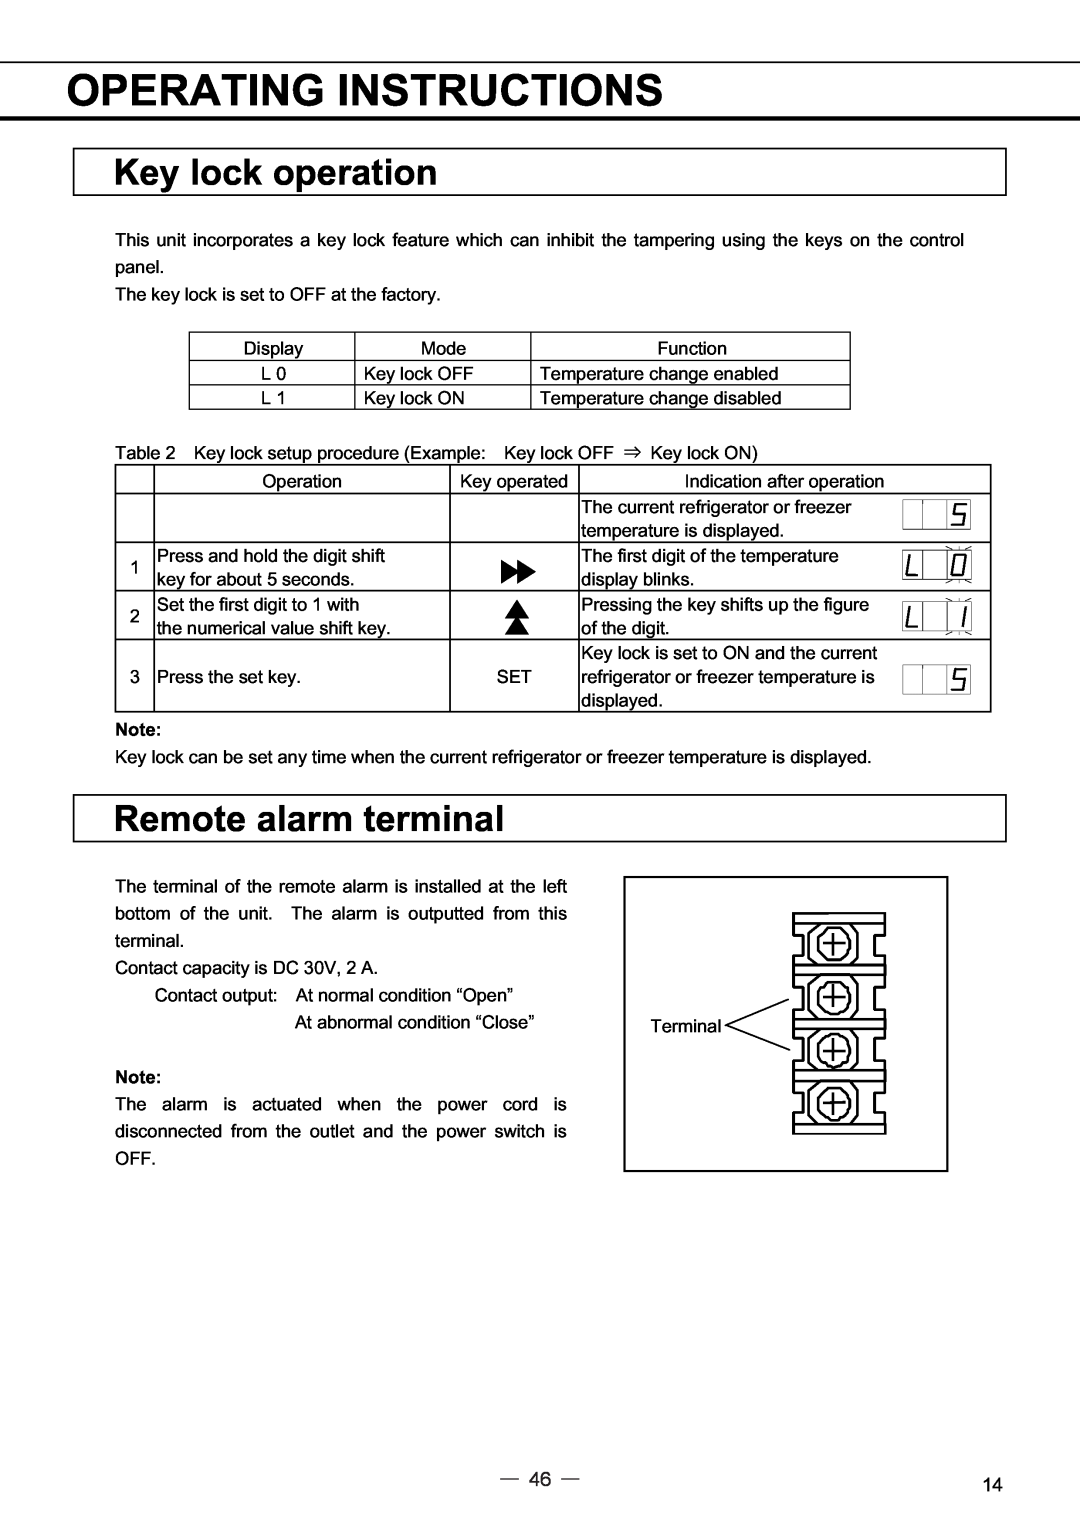 Sanyo MPR-414FS instruction manual Key lock operation, Remote alarm terminal, Operating Instructions 